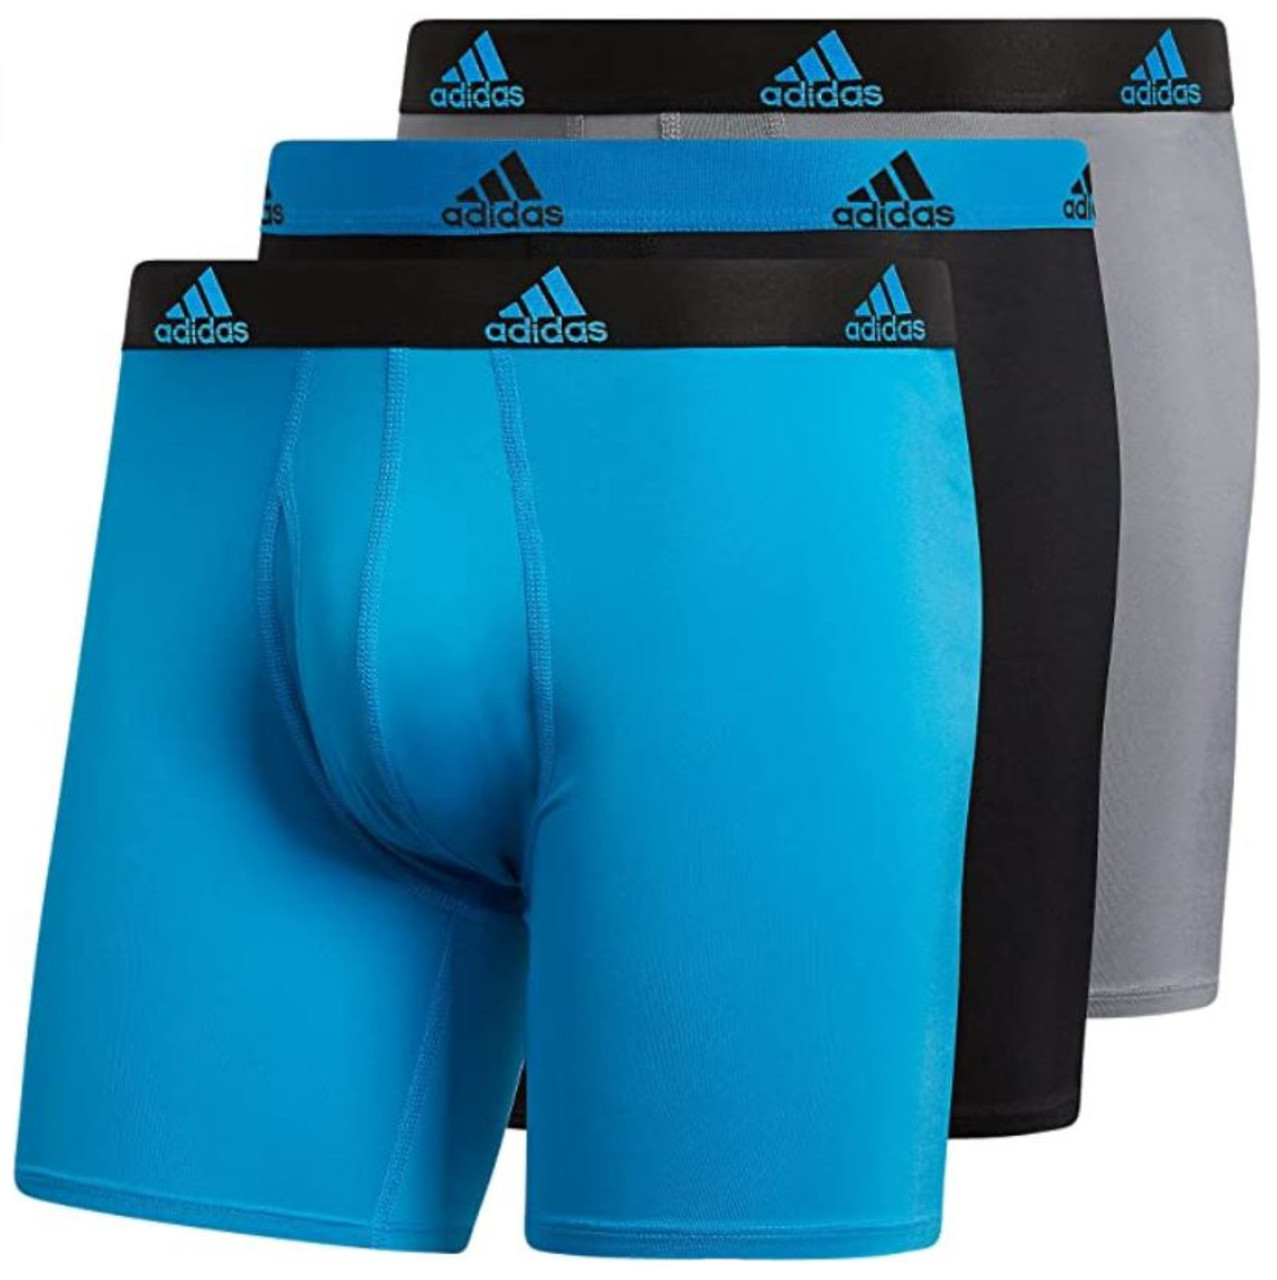 Adidas Men's Performance Boxer Brief Underwear (3-Pack) � Blue/Black/Grey -  Sports Diamond